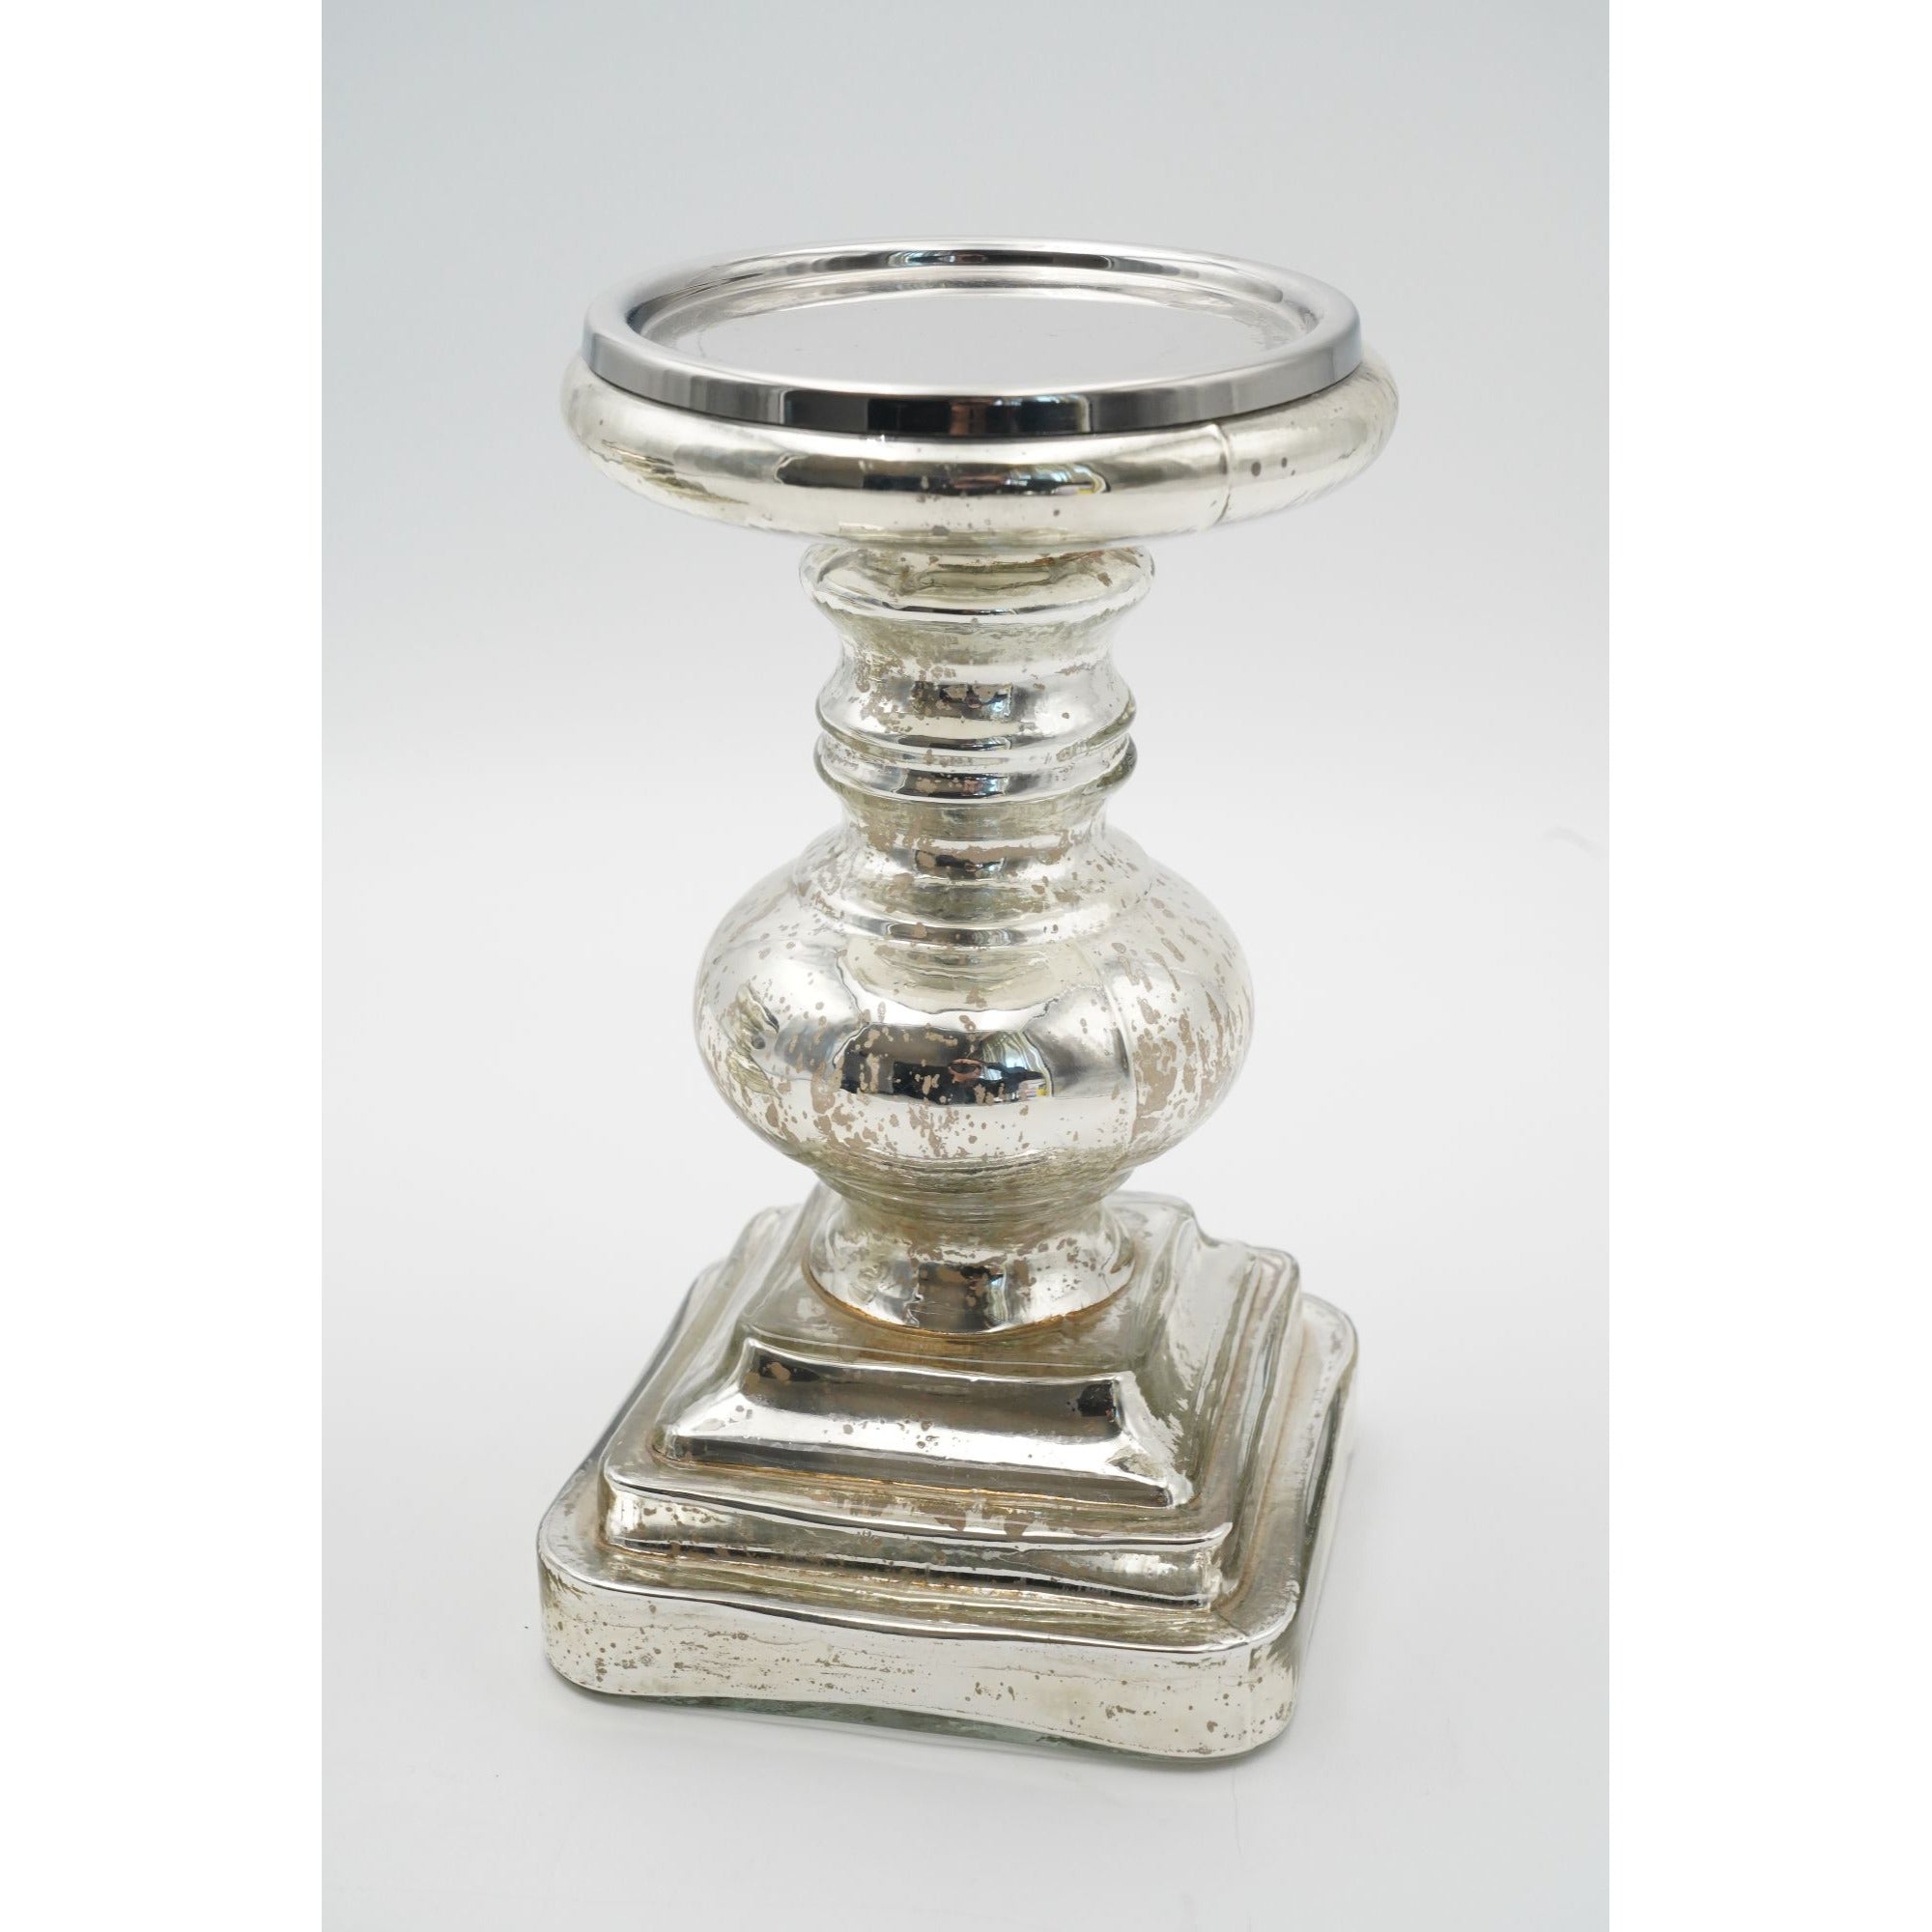 Pottery Barn Antique Mercury Glass Pillar Holders Small & Medium Set of 2